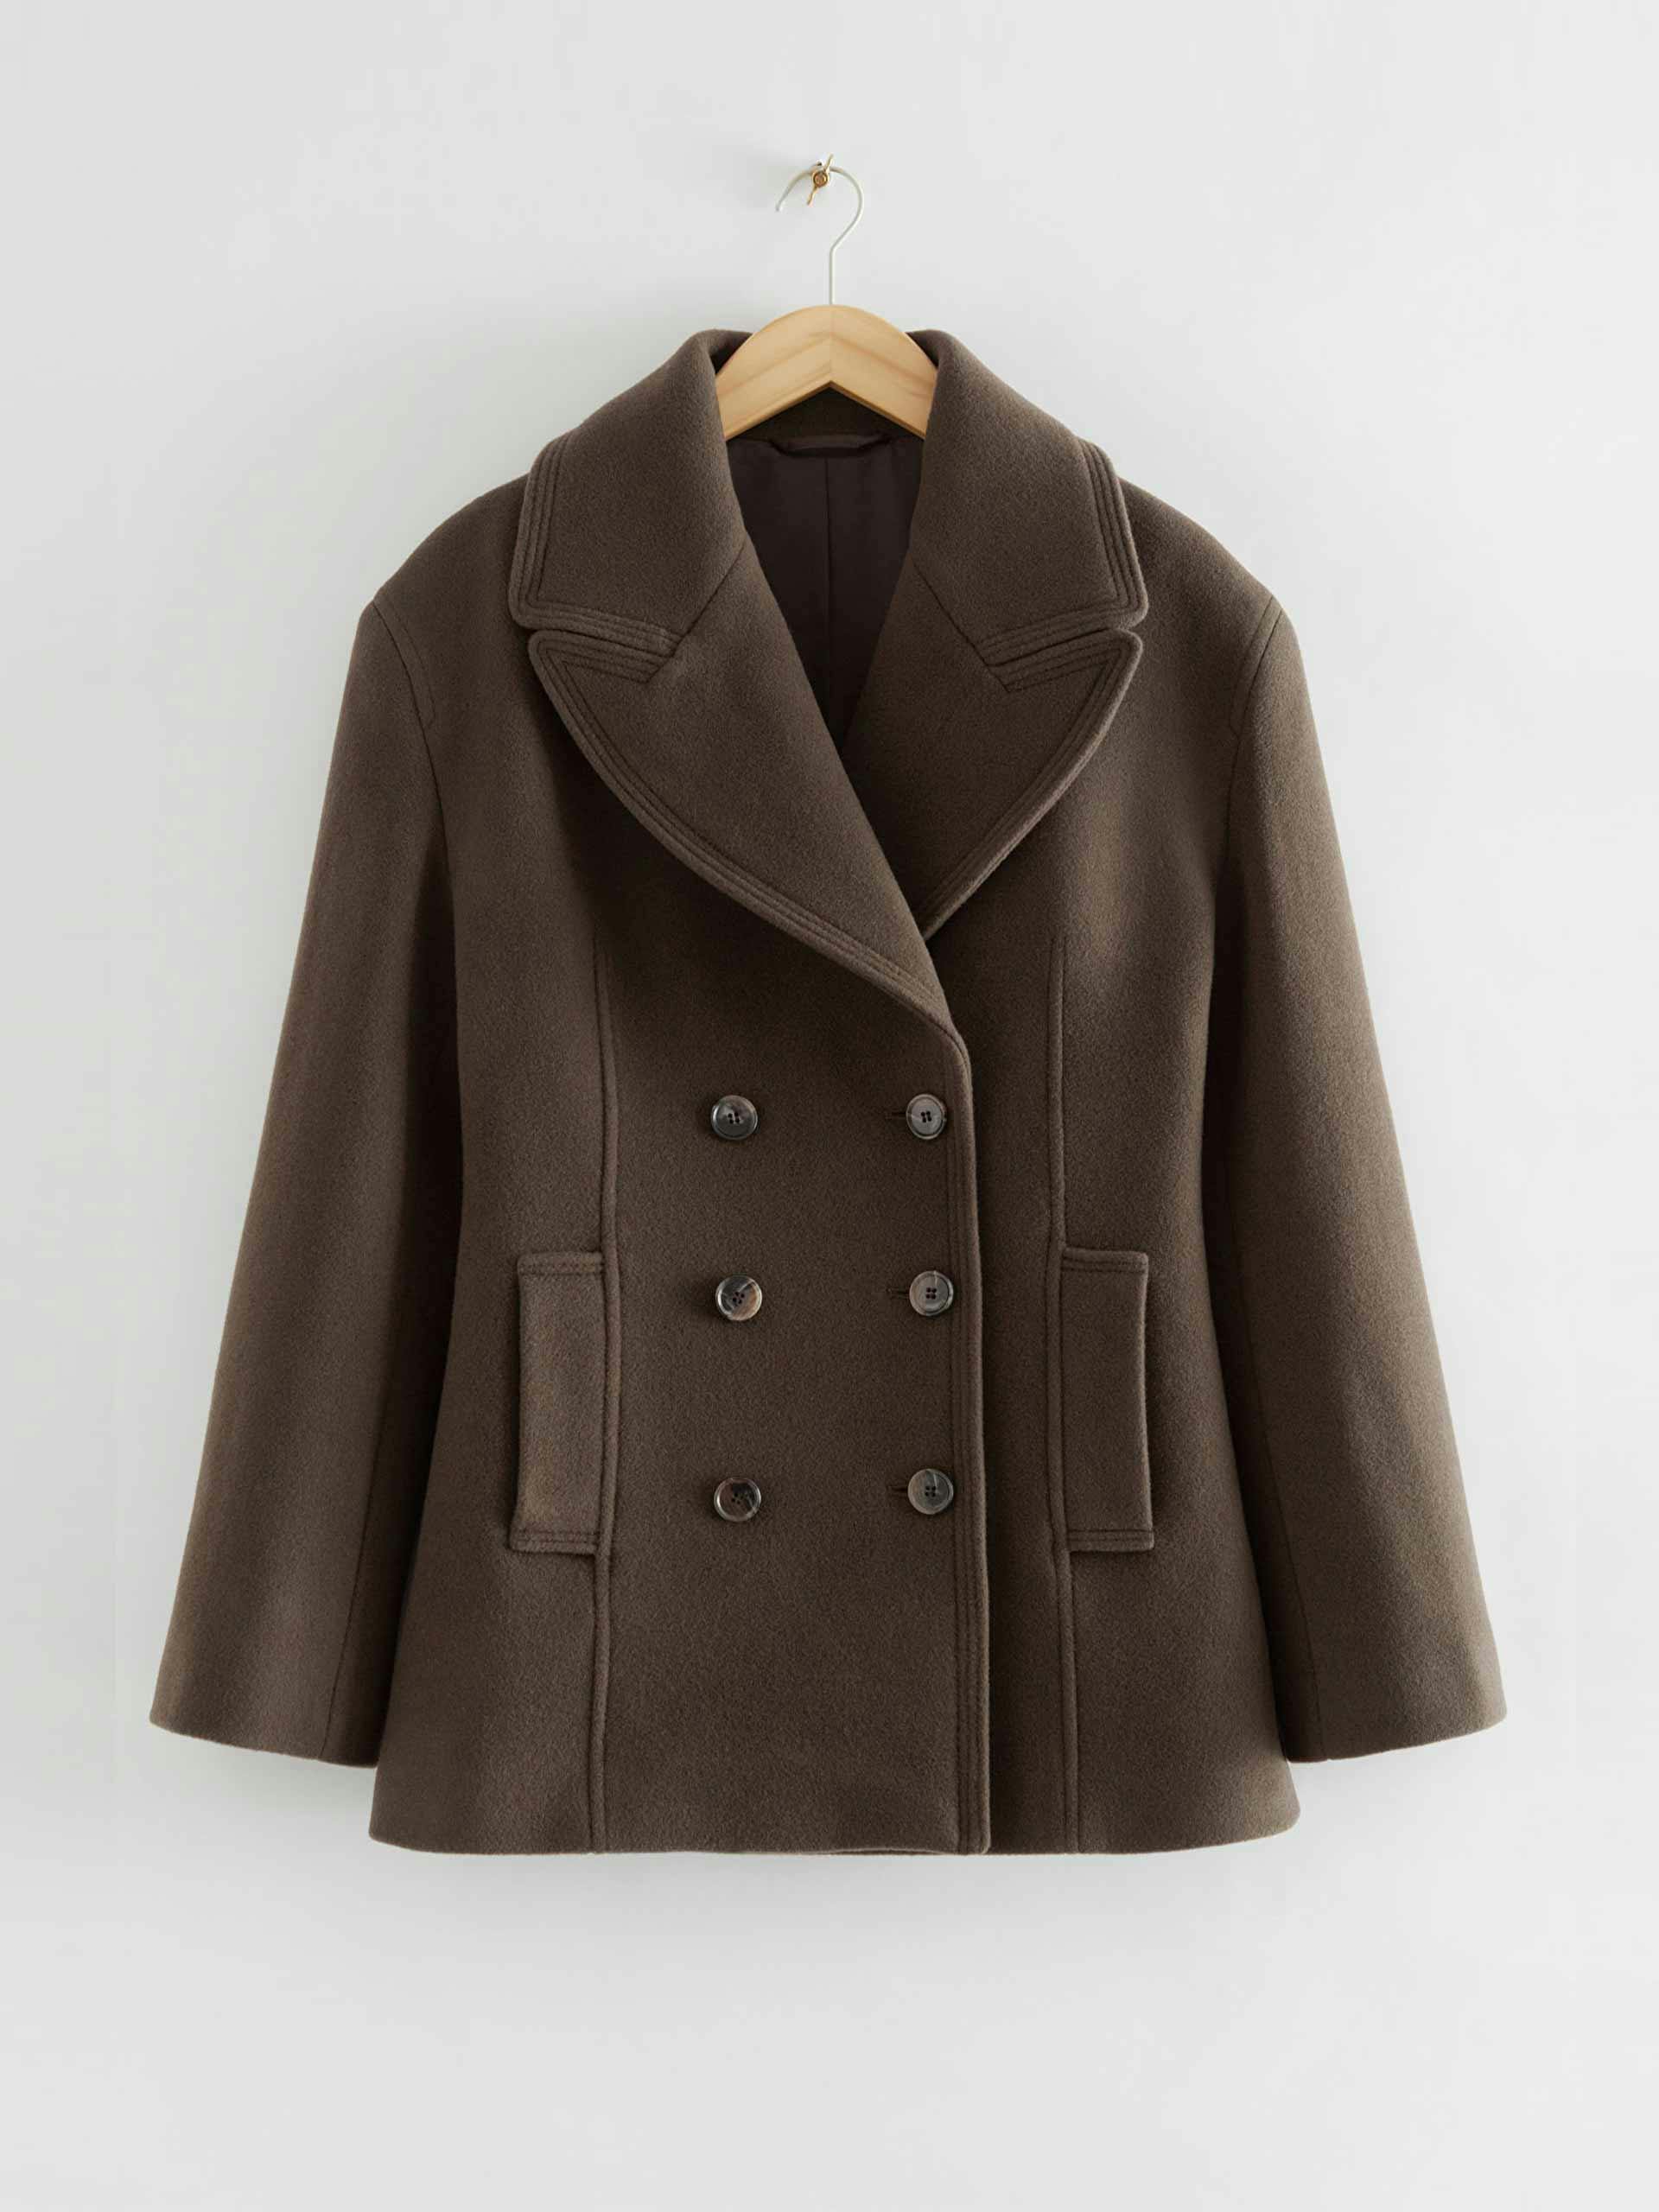 Brown wool pea coat